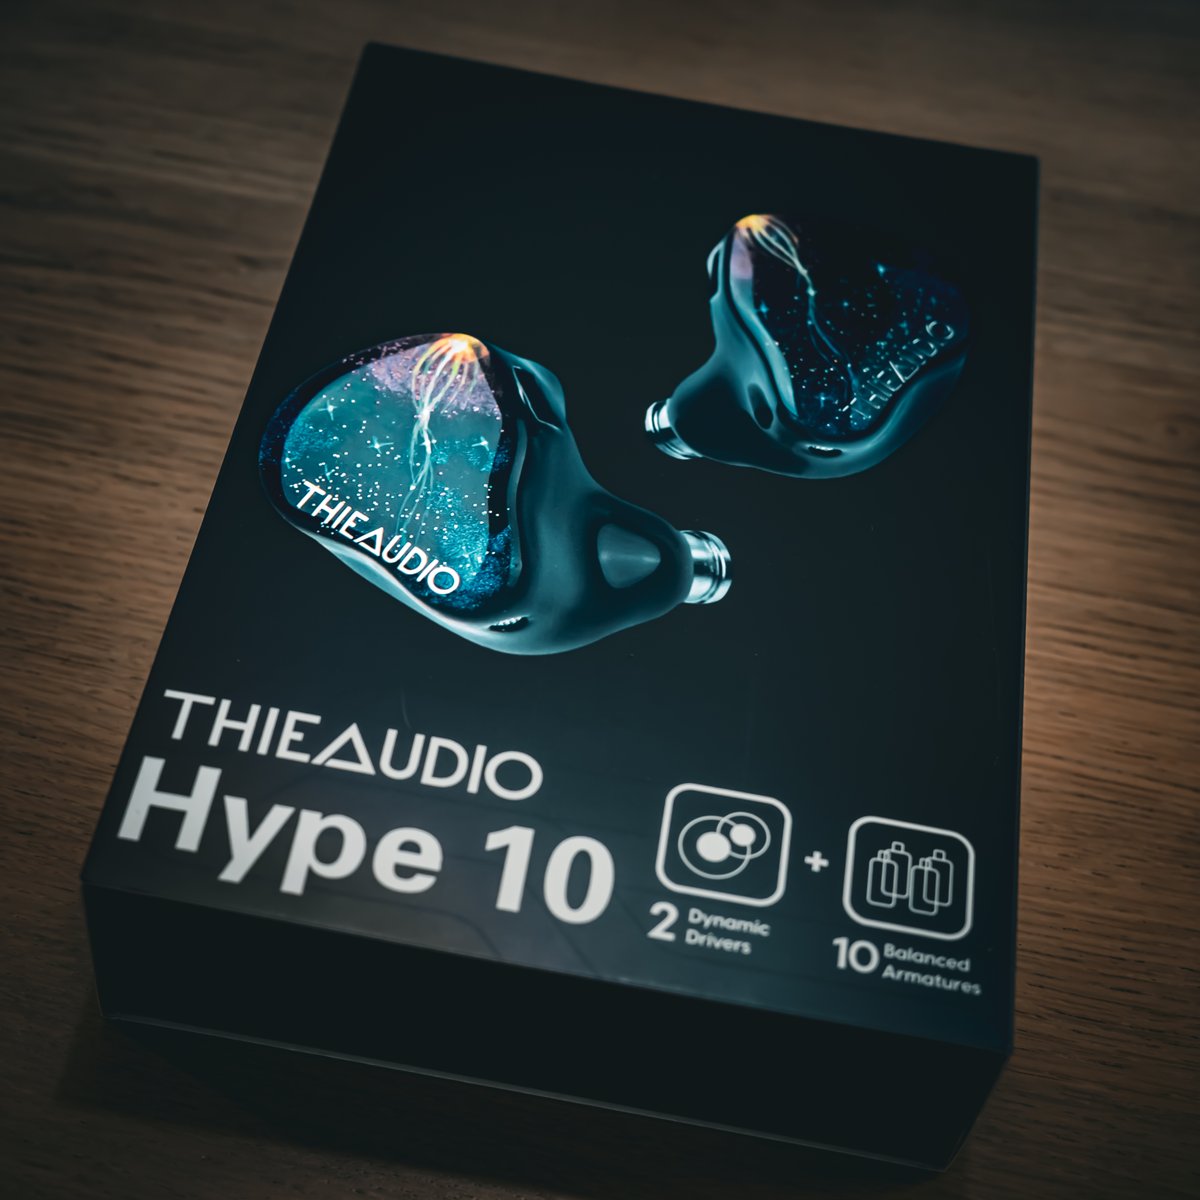 my new gear.....

THIEAUDIO Hype10

***
#gadgets #audio #portableaudio #earphone #headphone #thieaudio 
#ガジェット #オーディオ #ポータブルオーディオ #イヤホン #ヘッドホン